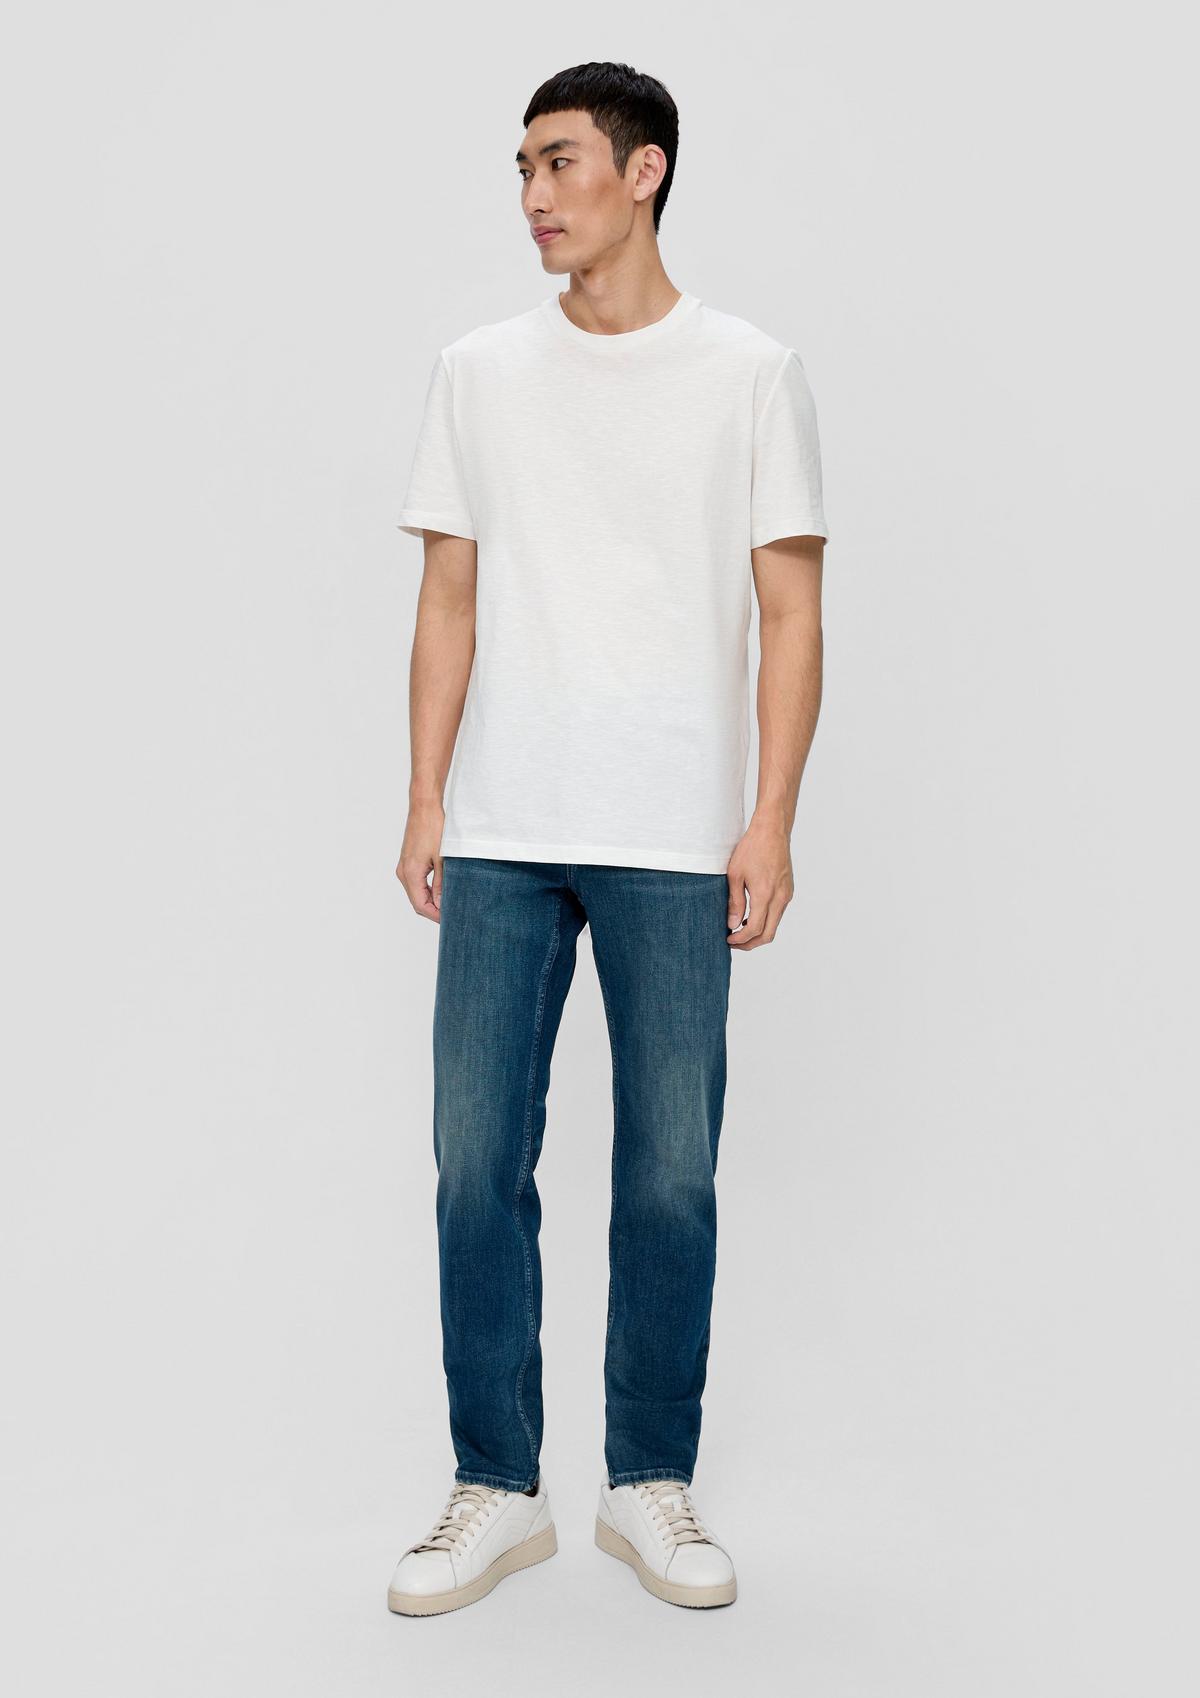 s.Oliver Nelio Jeans / Slim Fit / Mid Rise / Slim Leg / Stretch Cotton